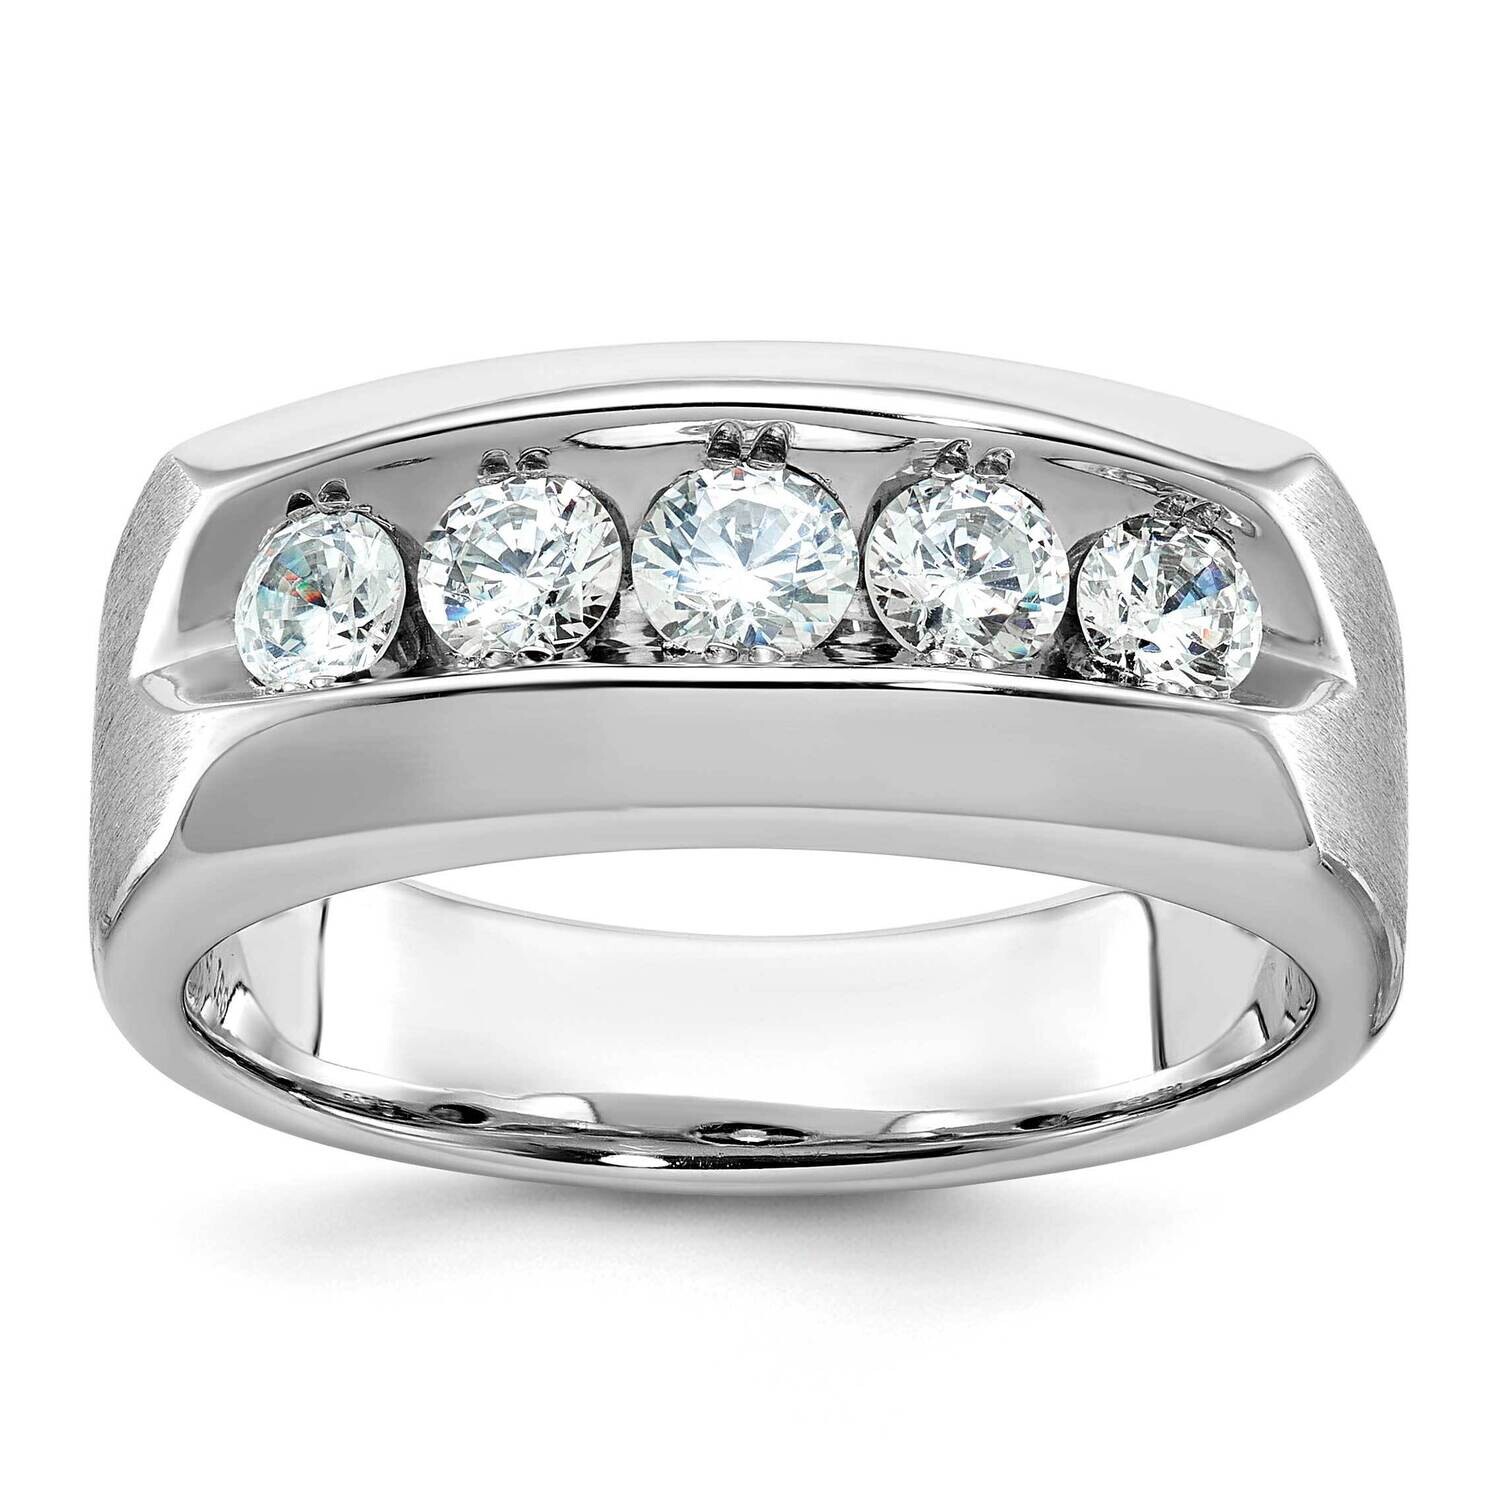 Ibgoodman Men's Polished Satin 5-Stone 1 Carat Aa Quality Diamond Ring 14k White Gold B63268-4WAA